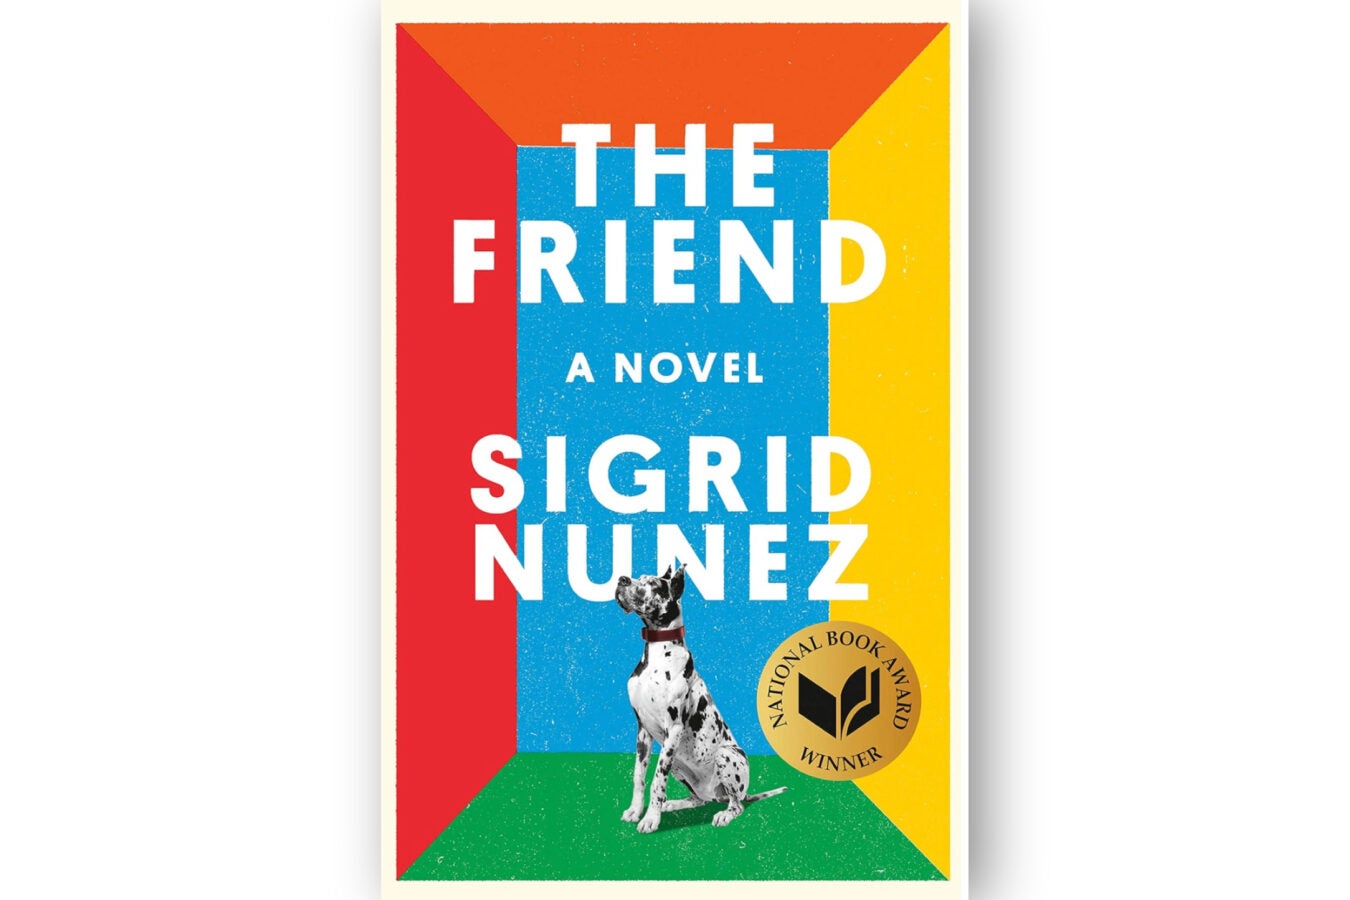 Book cover: "The Friend" by Sigrid Nunez.